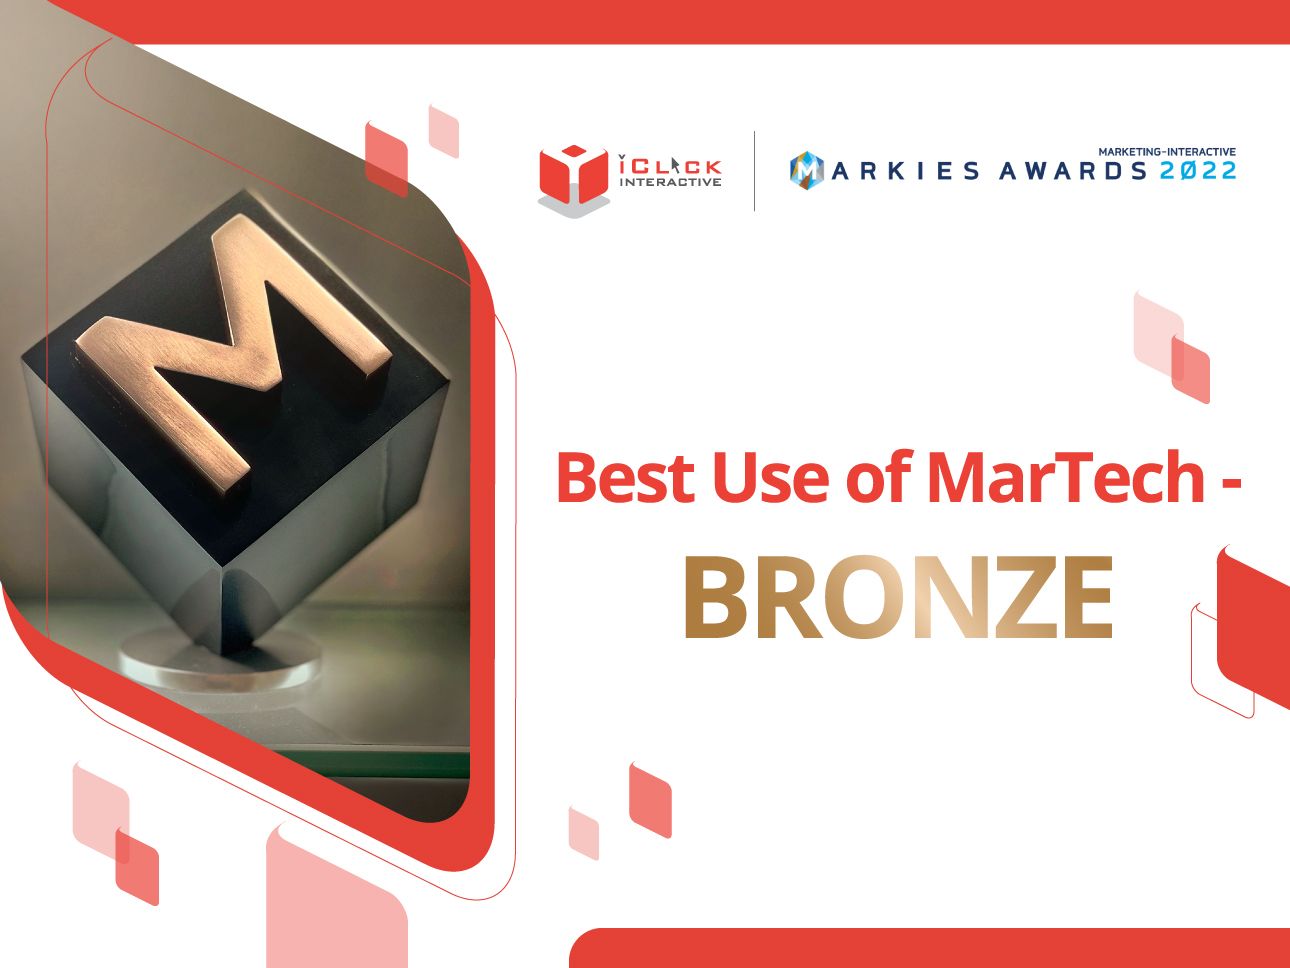 iClick Won the Best Use of MarTech – Bronze Award at Marketing Interactive’s MARKies Awards 2022!